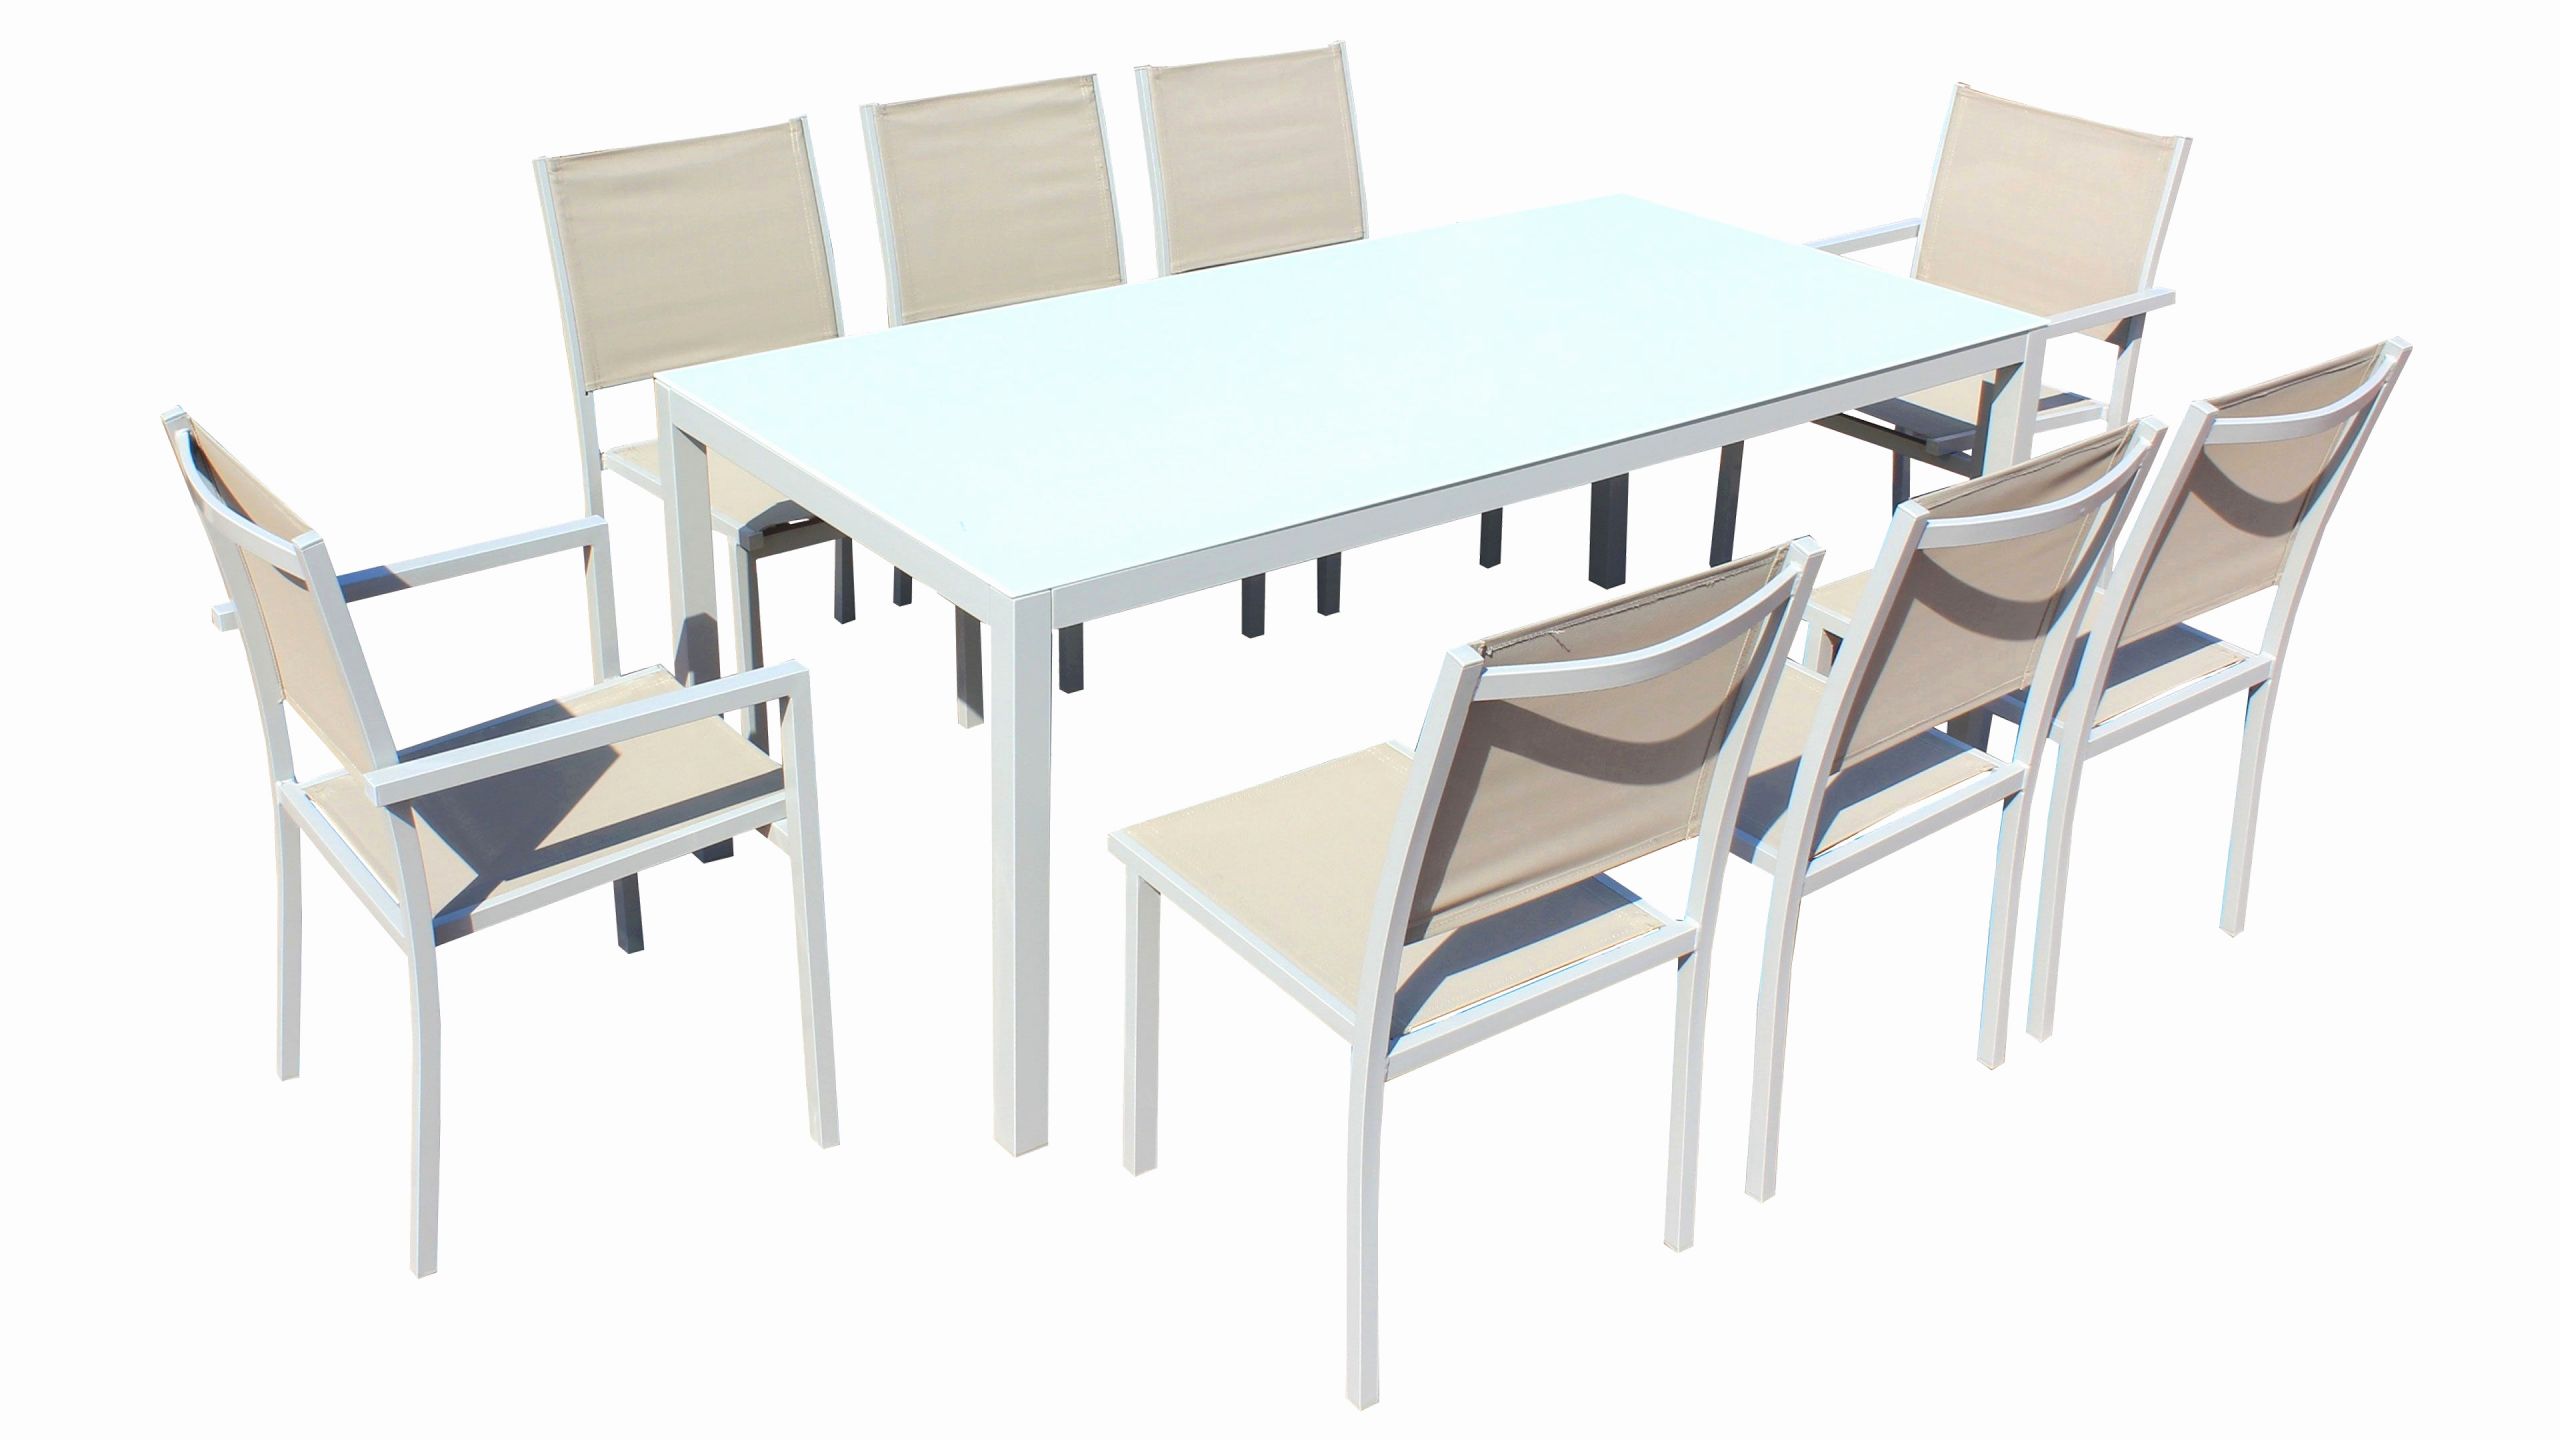 alinea chaise cuisine elegant adorable table de cuisine plus chaises dans chaise table chaise of alinea chaise cuisine